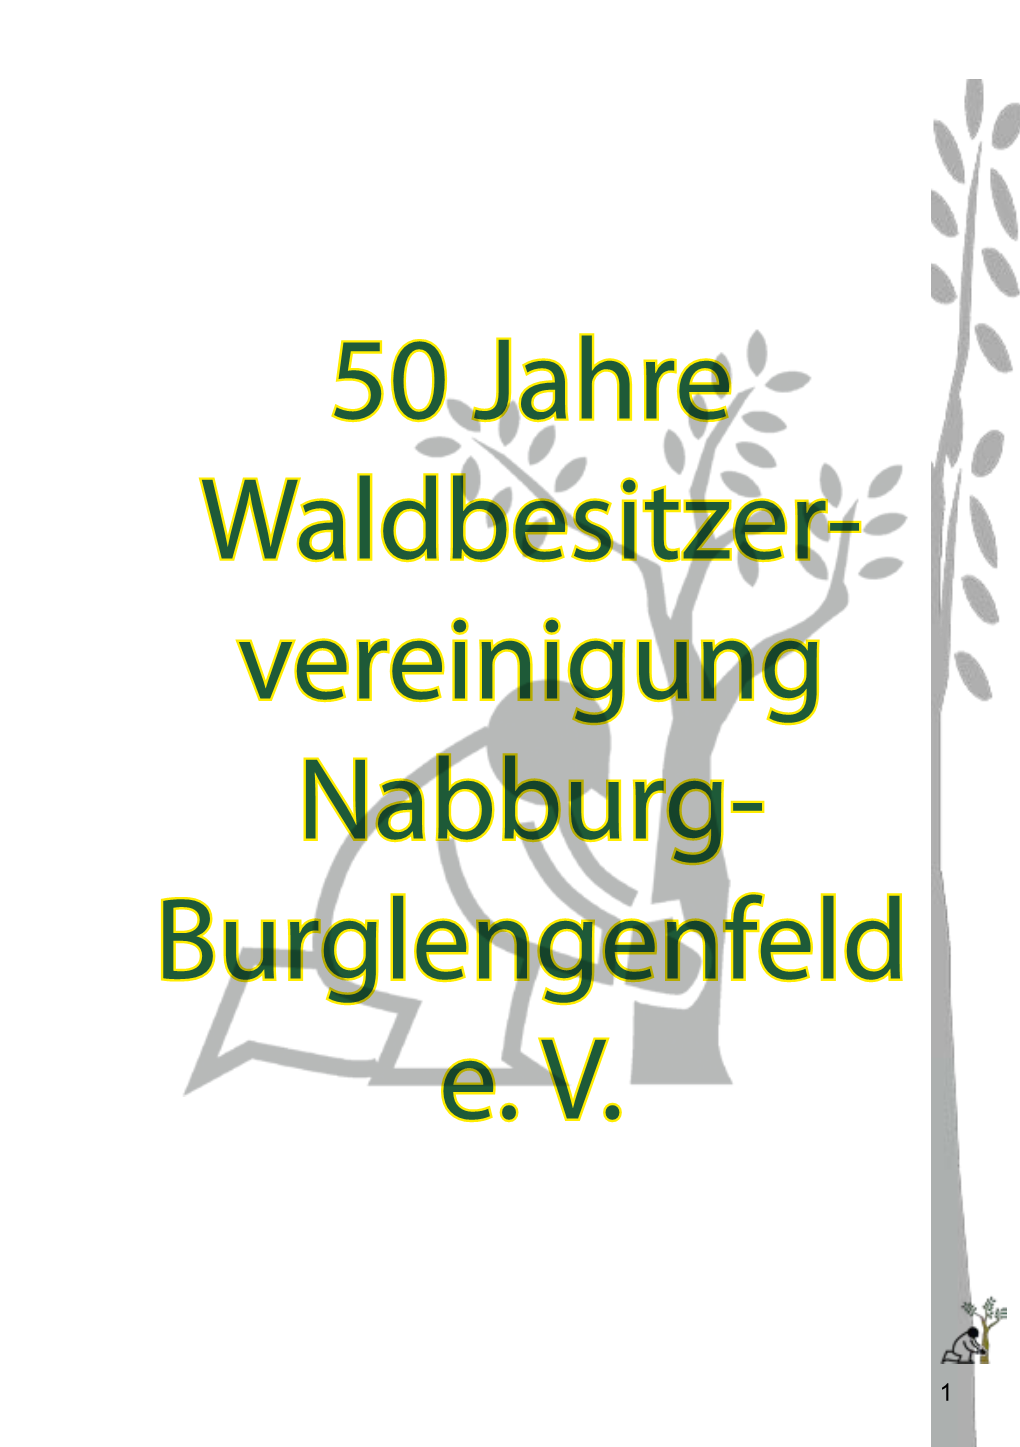 50 Jahre Waldbesitzer Vereinigung Nabburg Burglengenfeld E. V